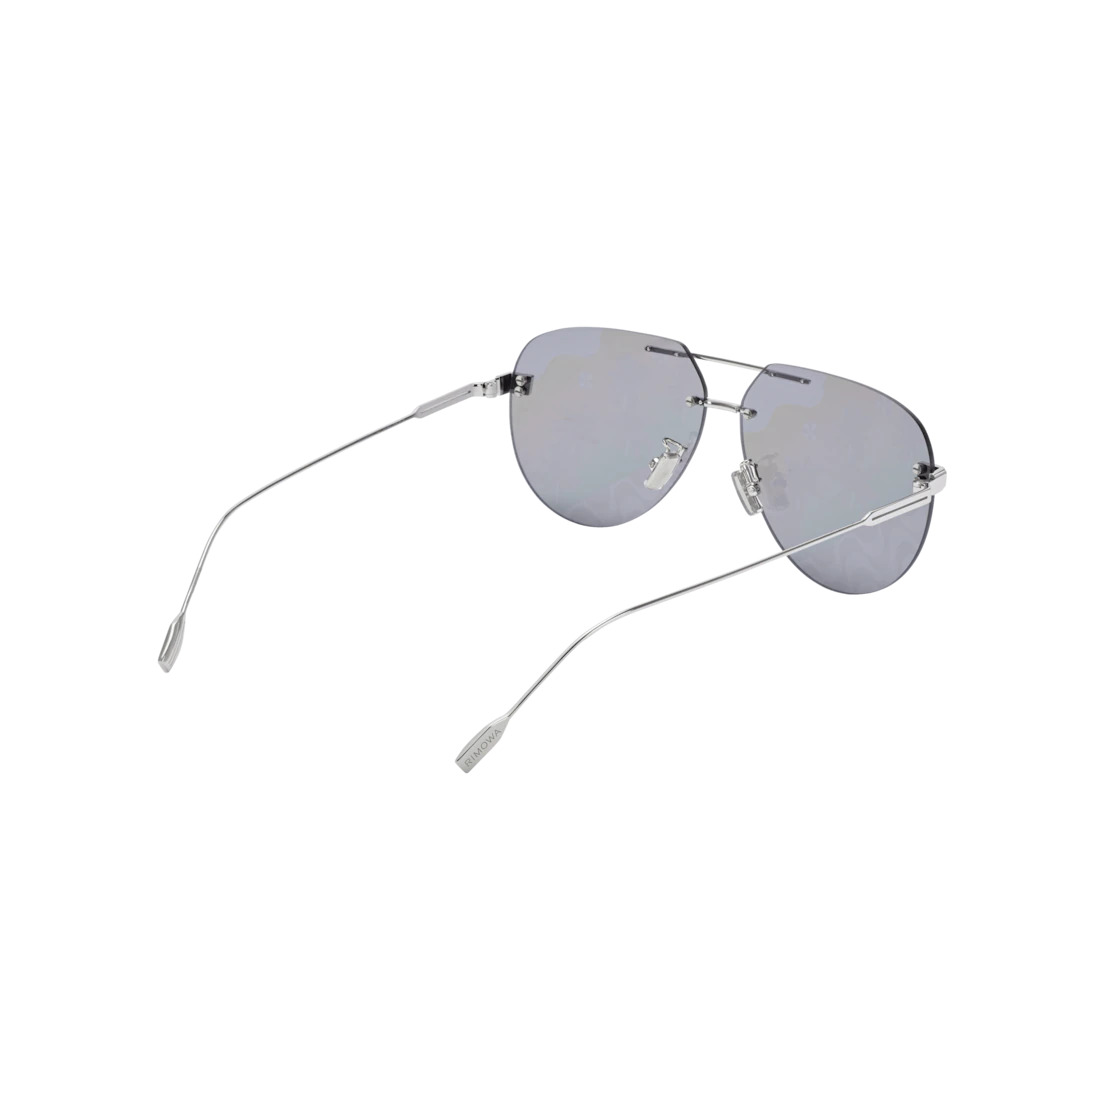 Eyewear Pilot Rimless Sunglasses - 7